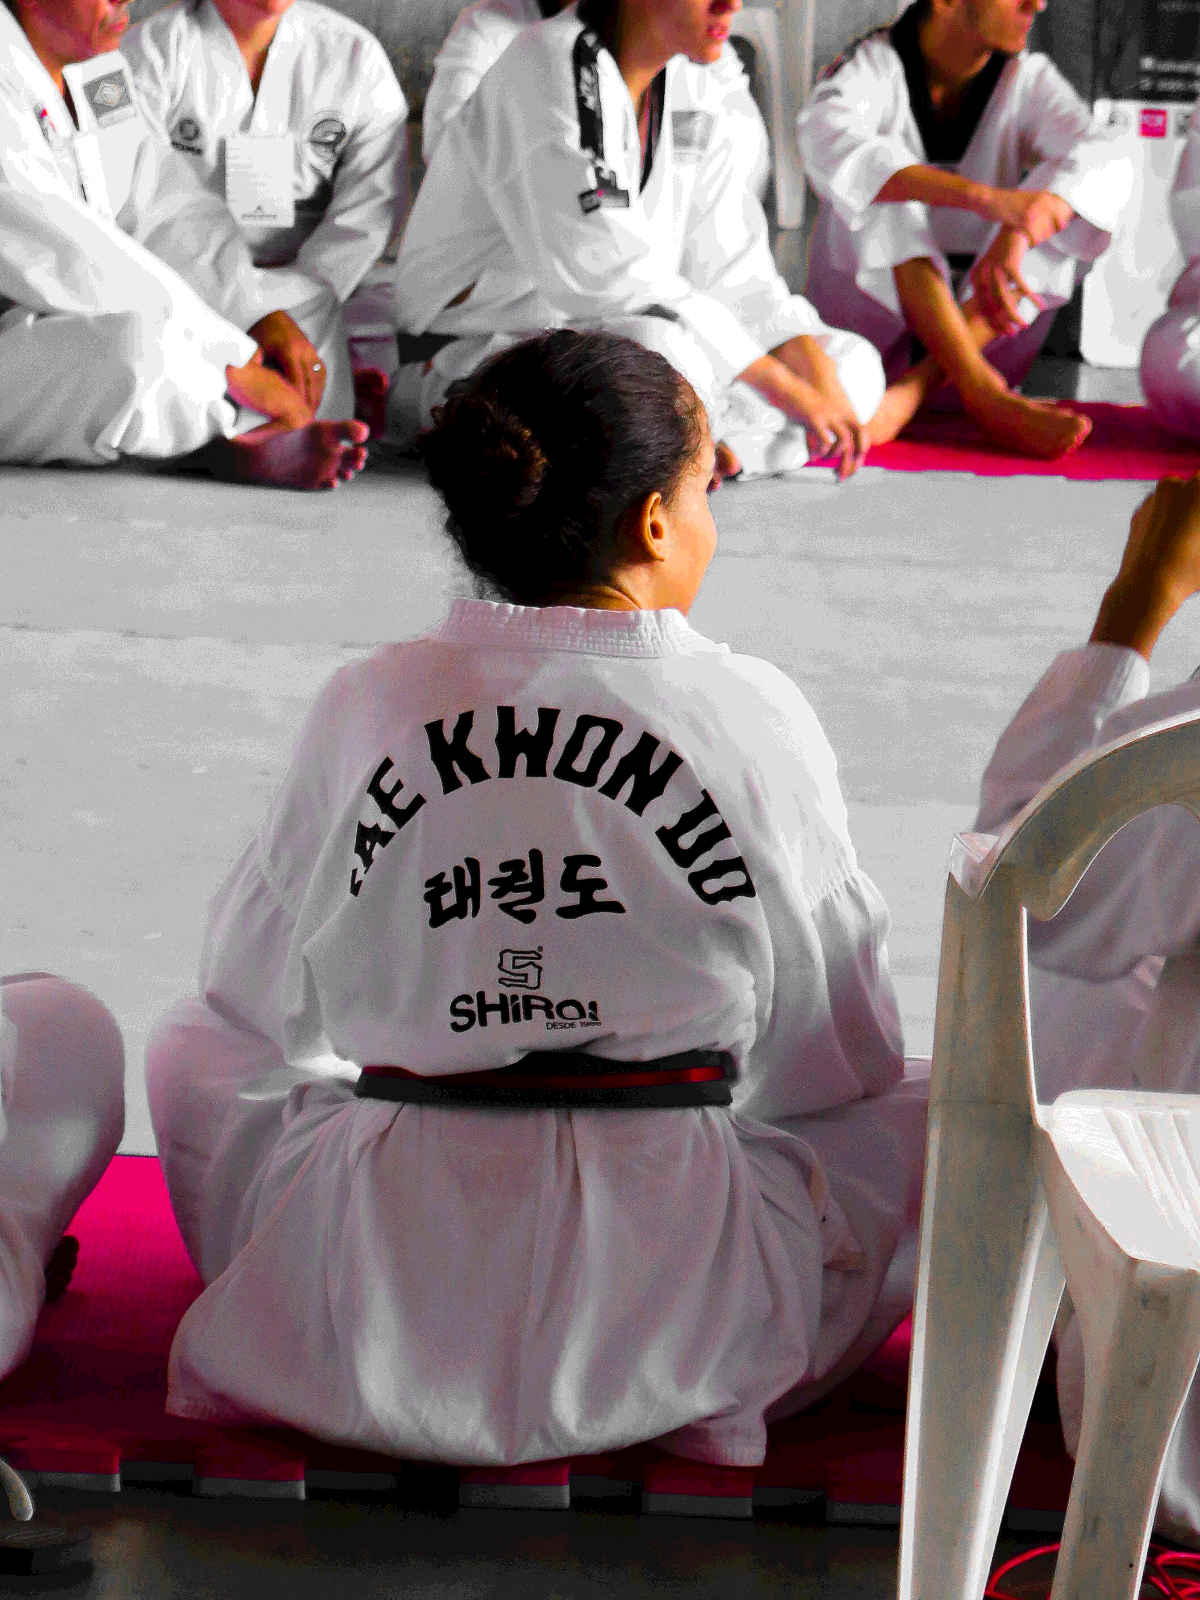 Taekwondo students sit listening to their instructor